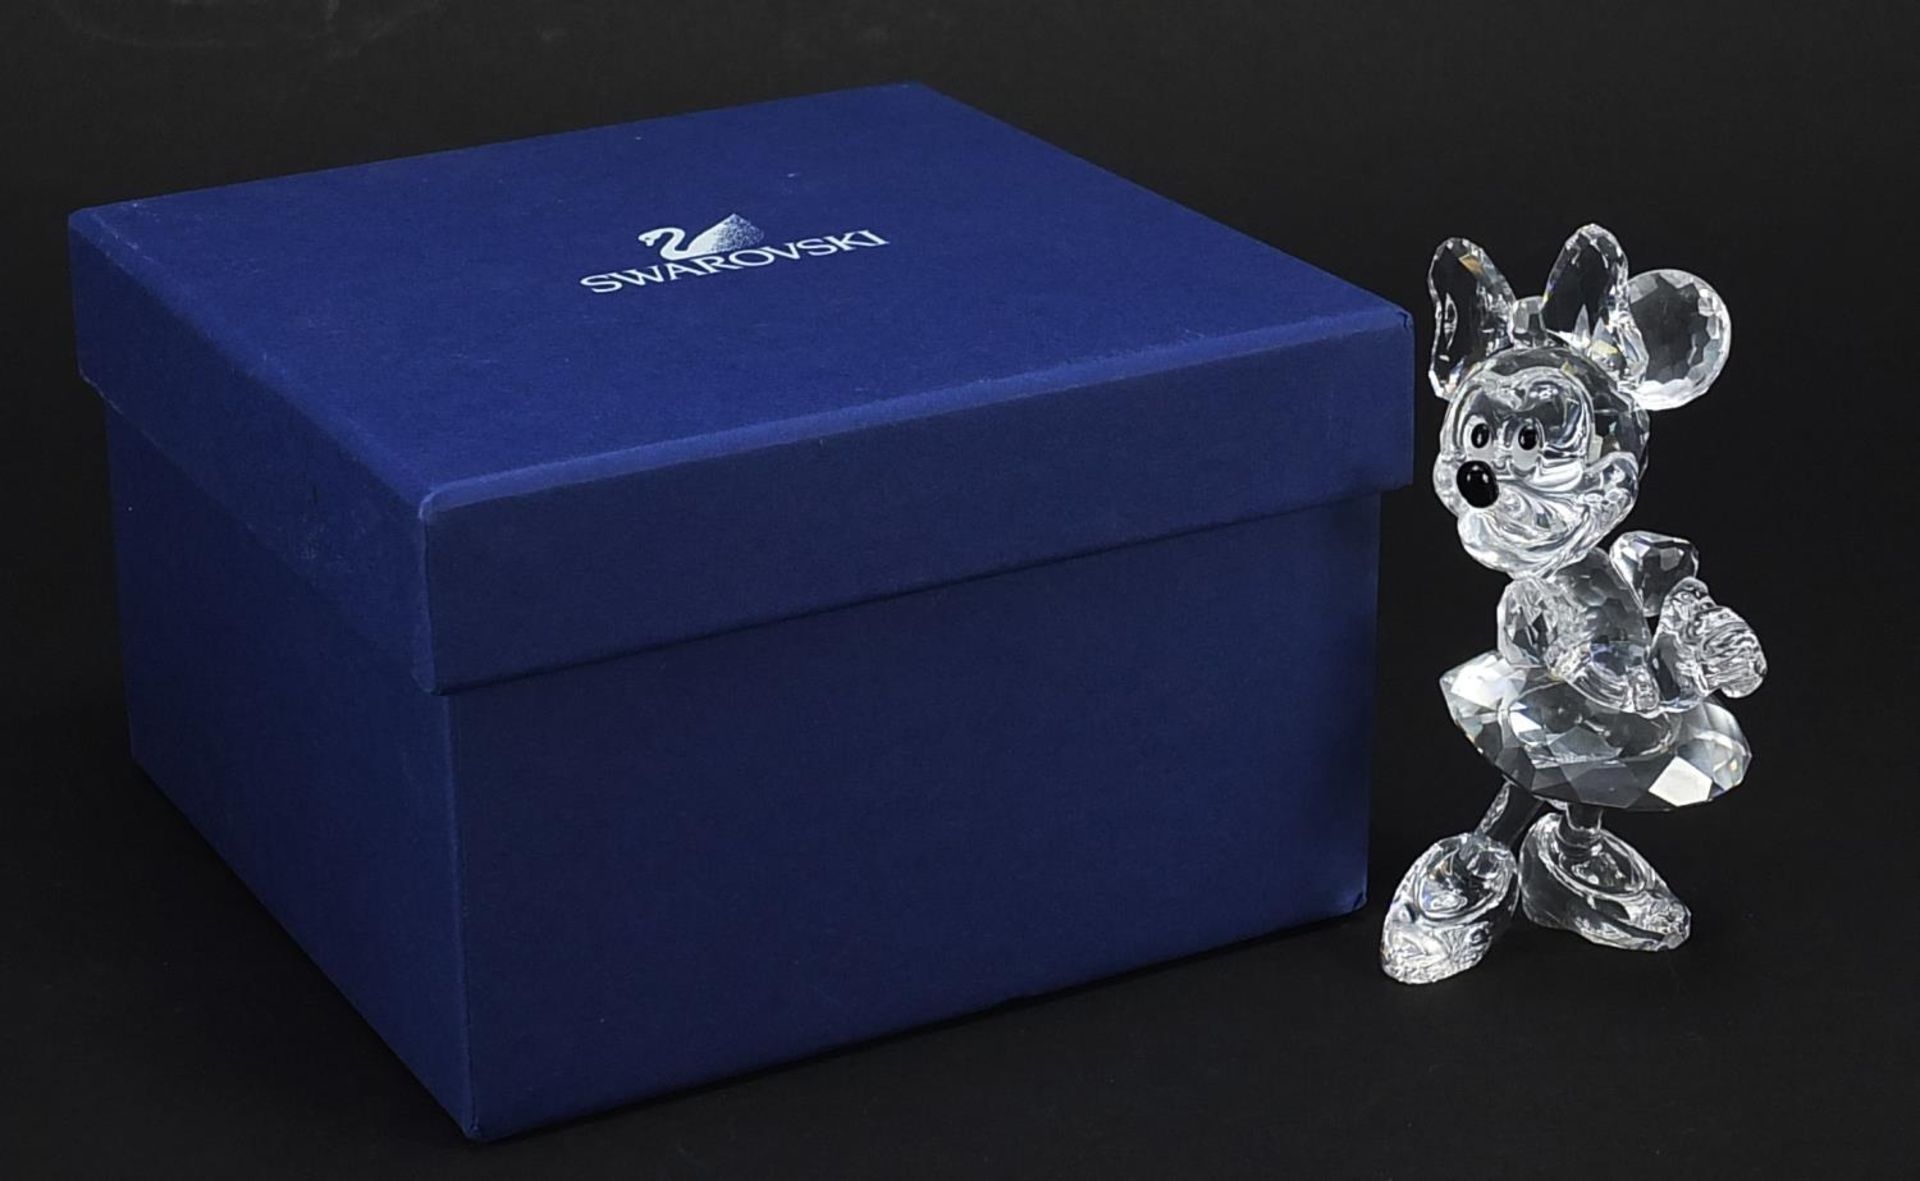 Swarovski Crystal Minnie Mouse Disney figure with box, 10.5cm high